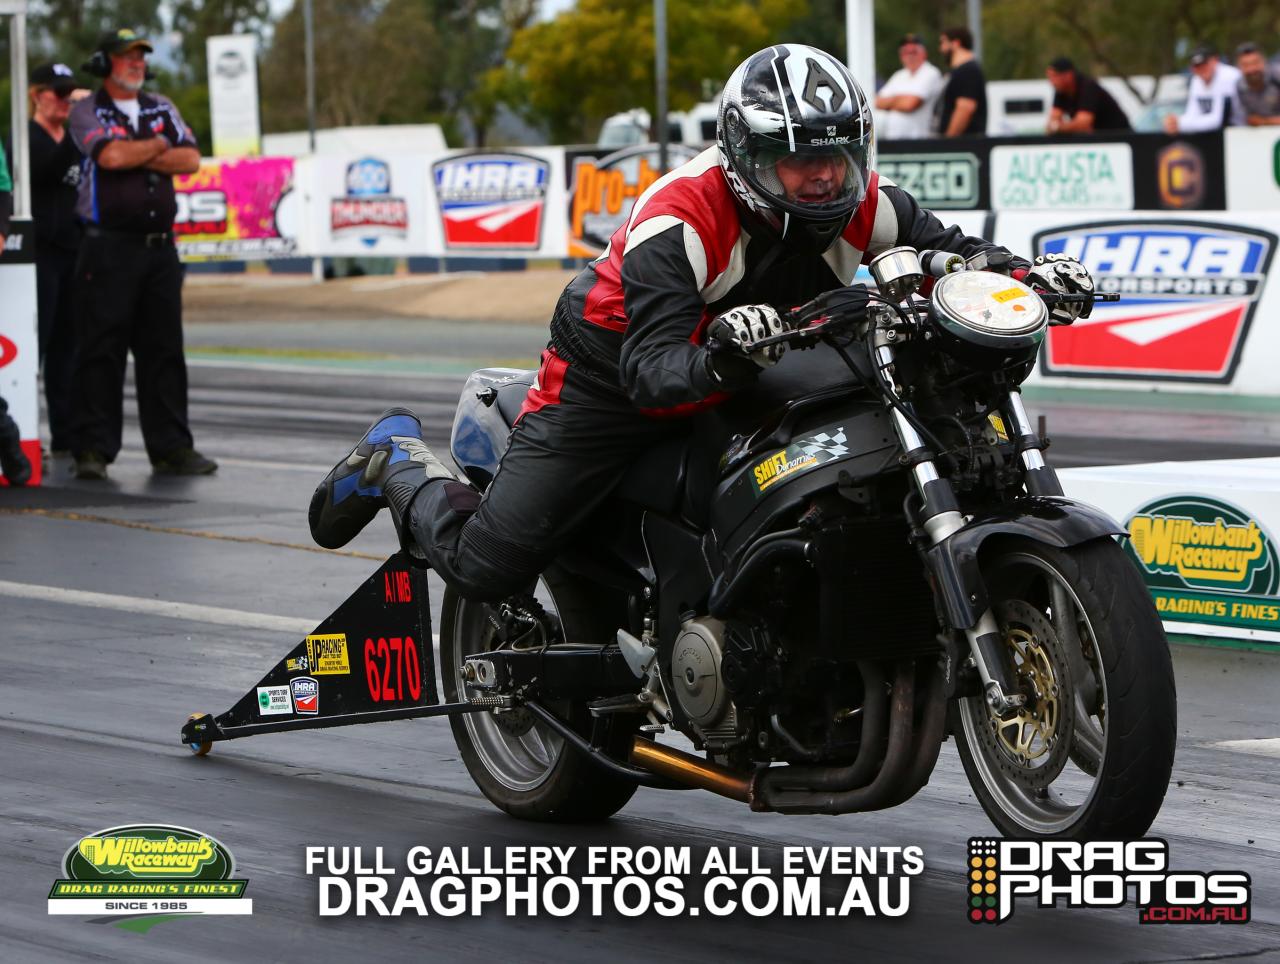 Qdrc Willowbank Raceway | Dragphotos.com.au